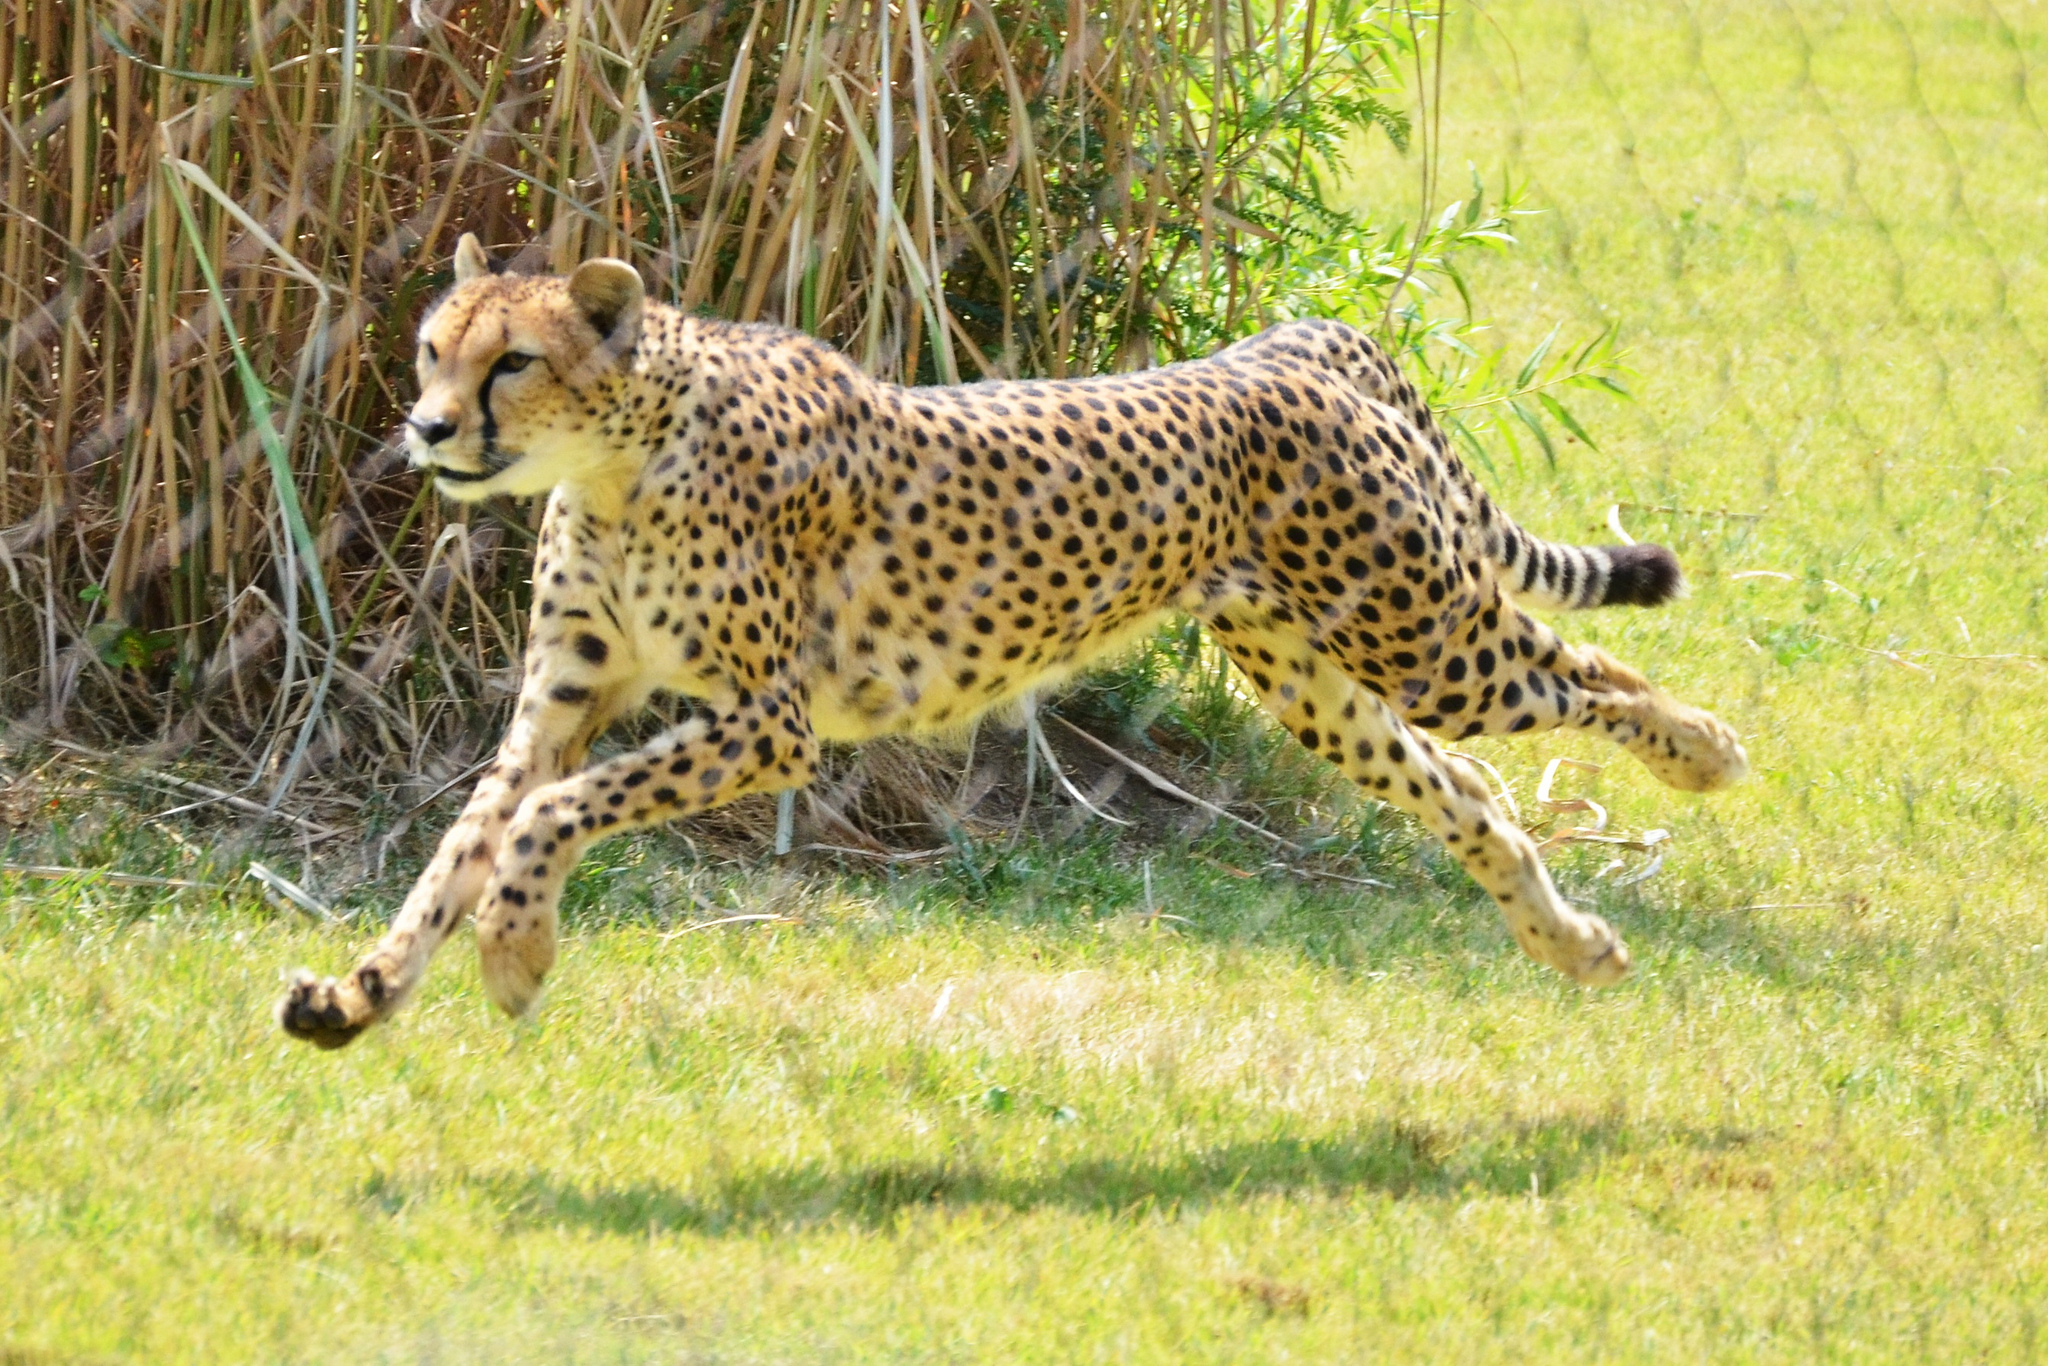 Sarah The Cheetah, World’s Fastest Land Animal, Has Died